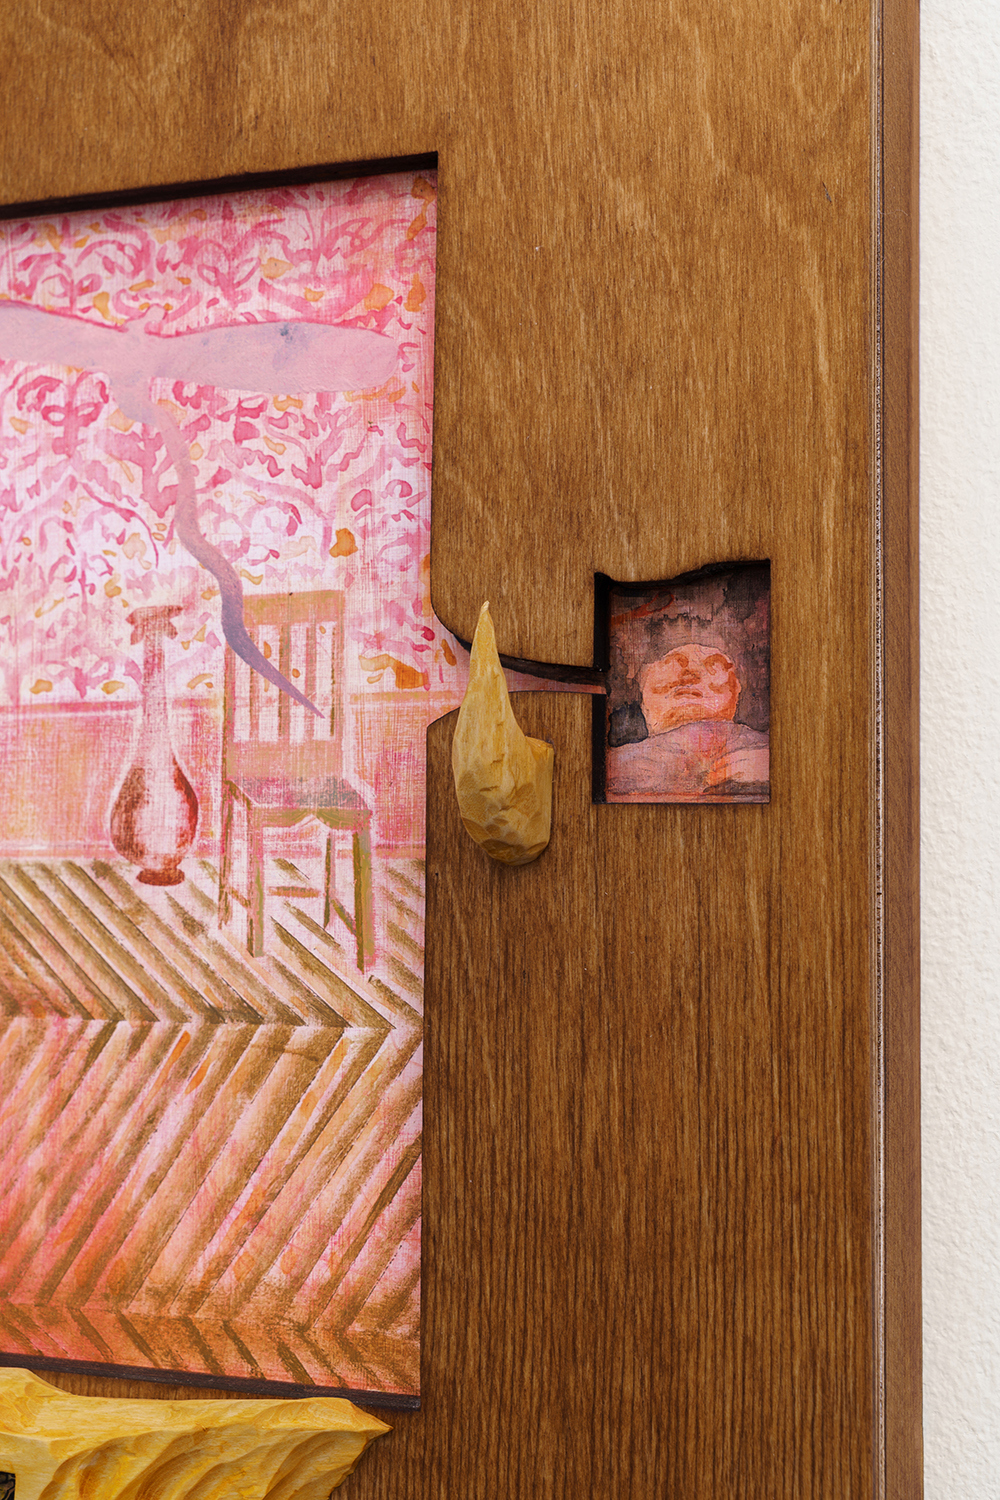 ‘Hot Pollen’, 2022, linden, acrylic, plywood, 40x30 cm (Details)